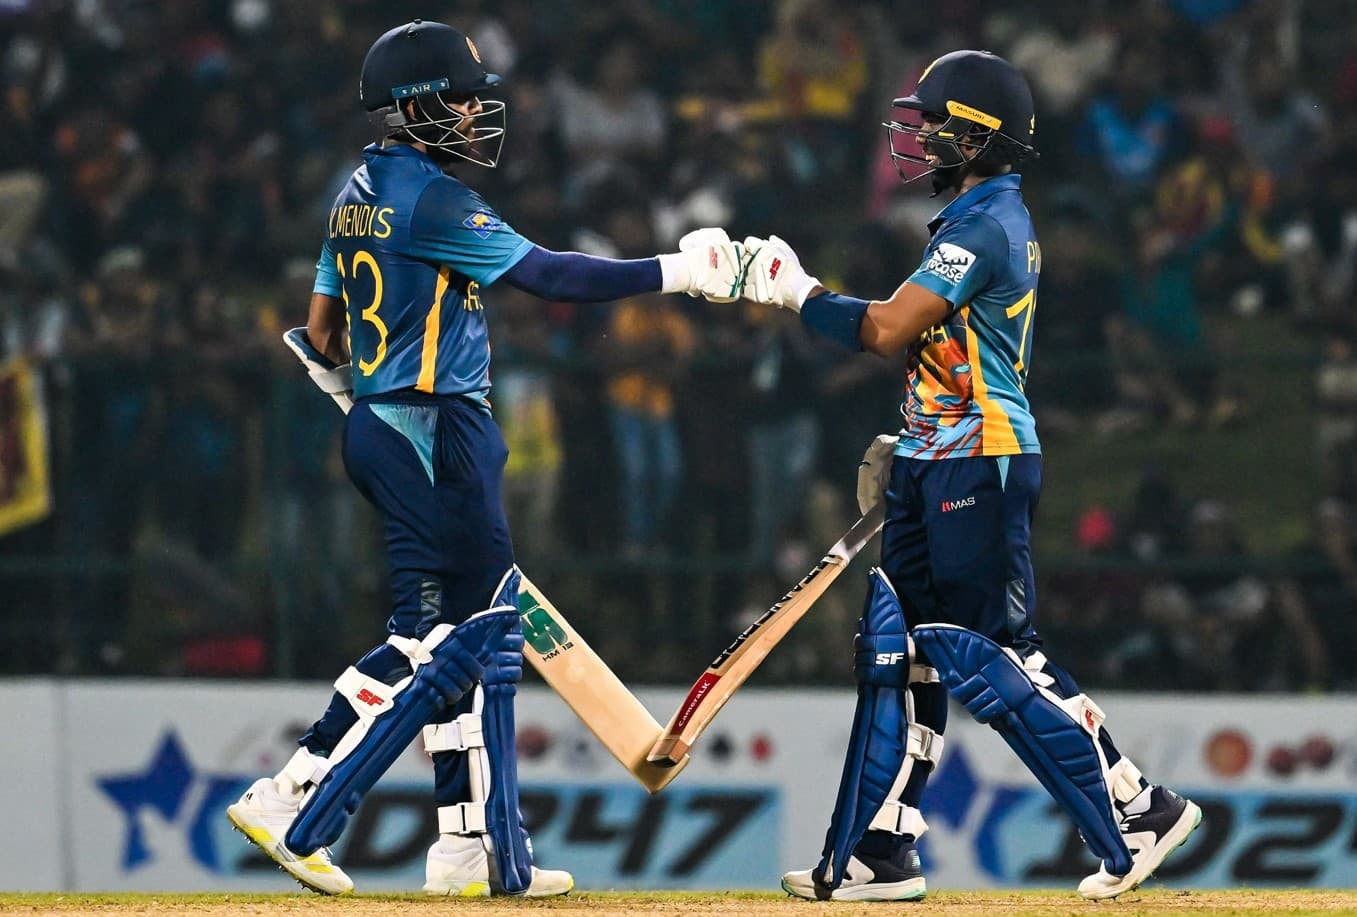 SL vs AFG 2022 | Sri Lanka overcomes Rashid Khan threat to clinch thriller, levels series
